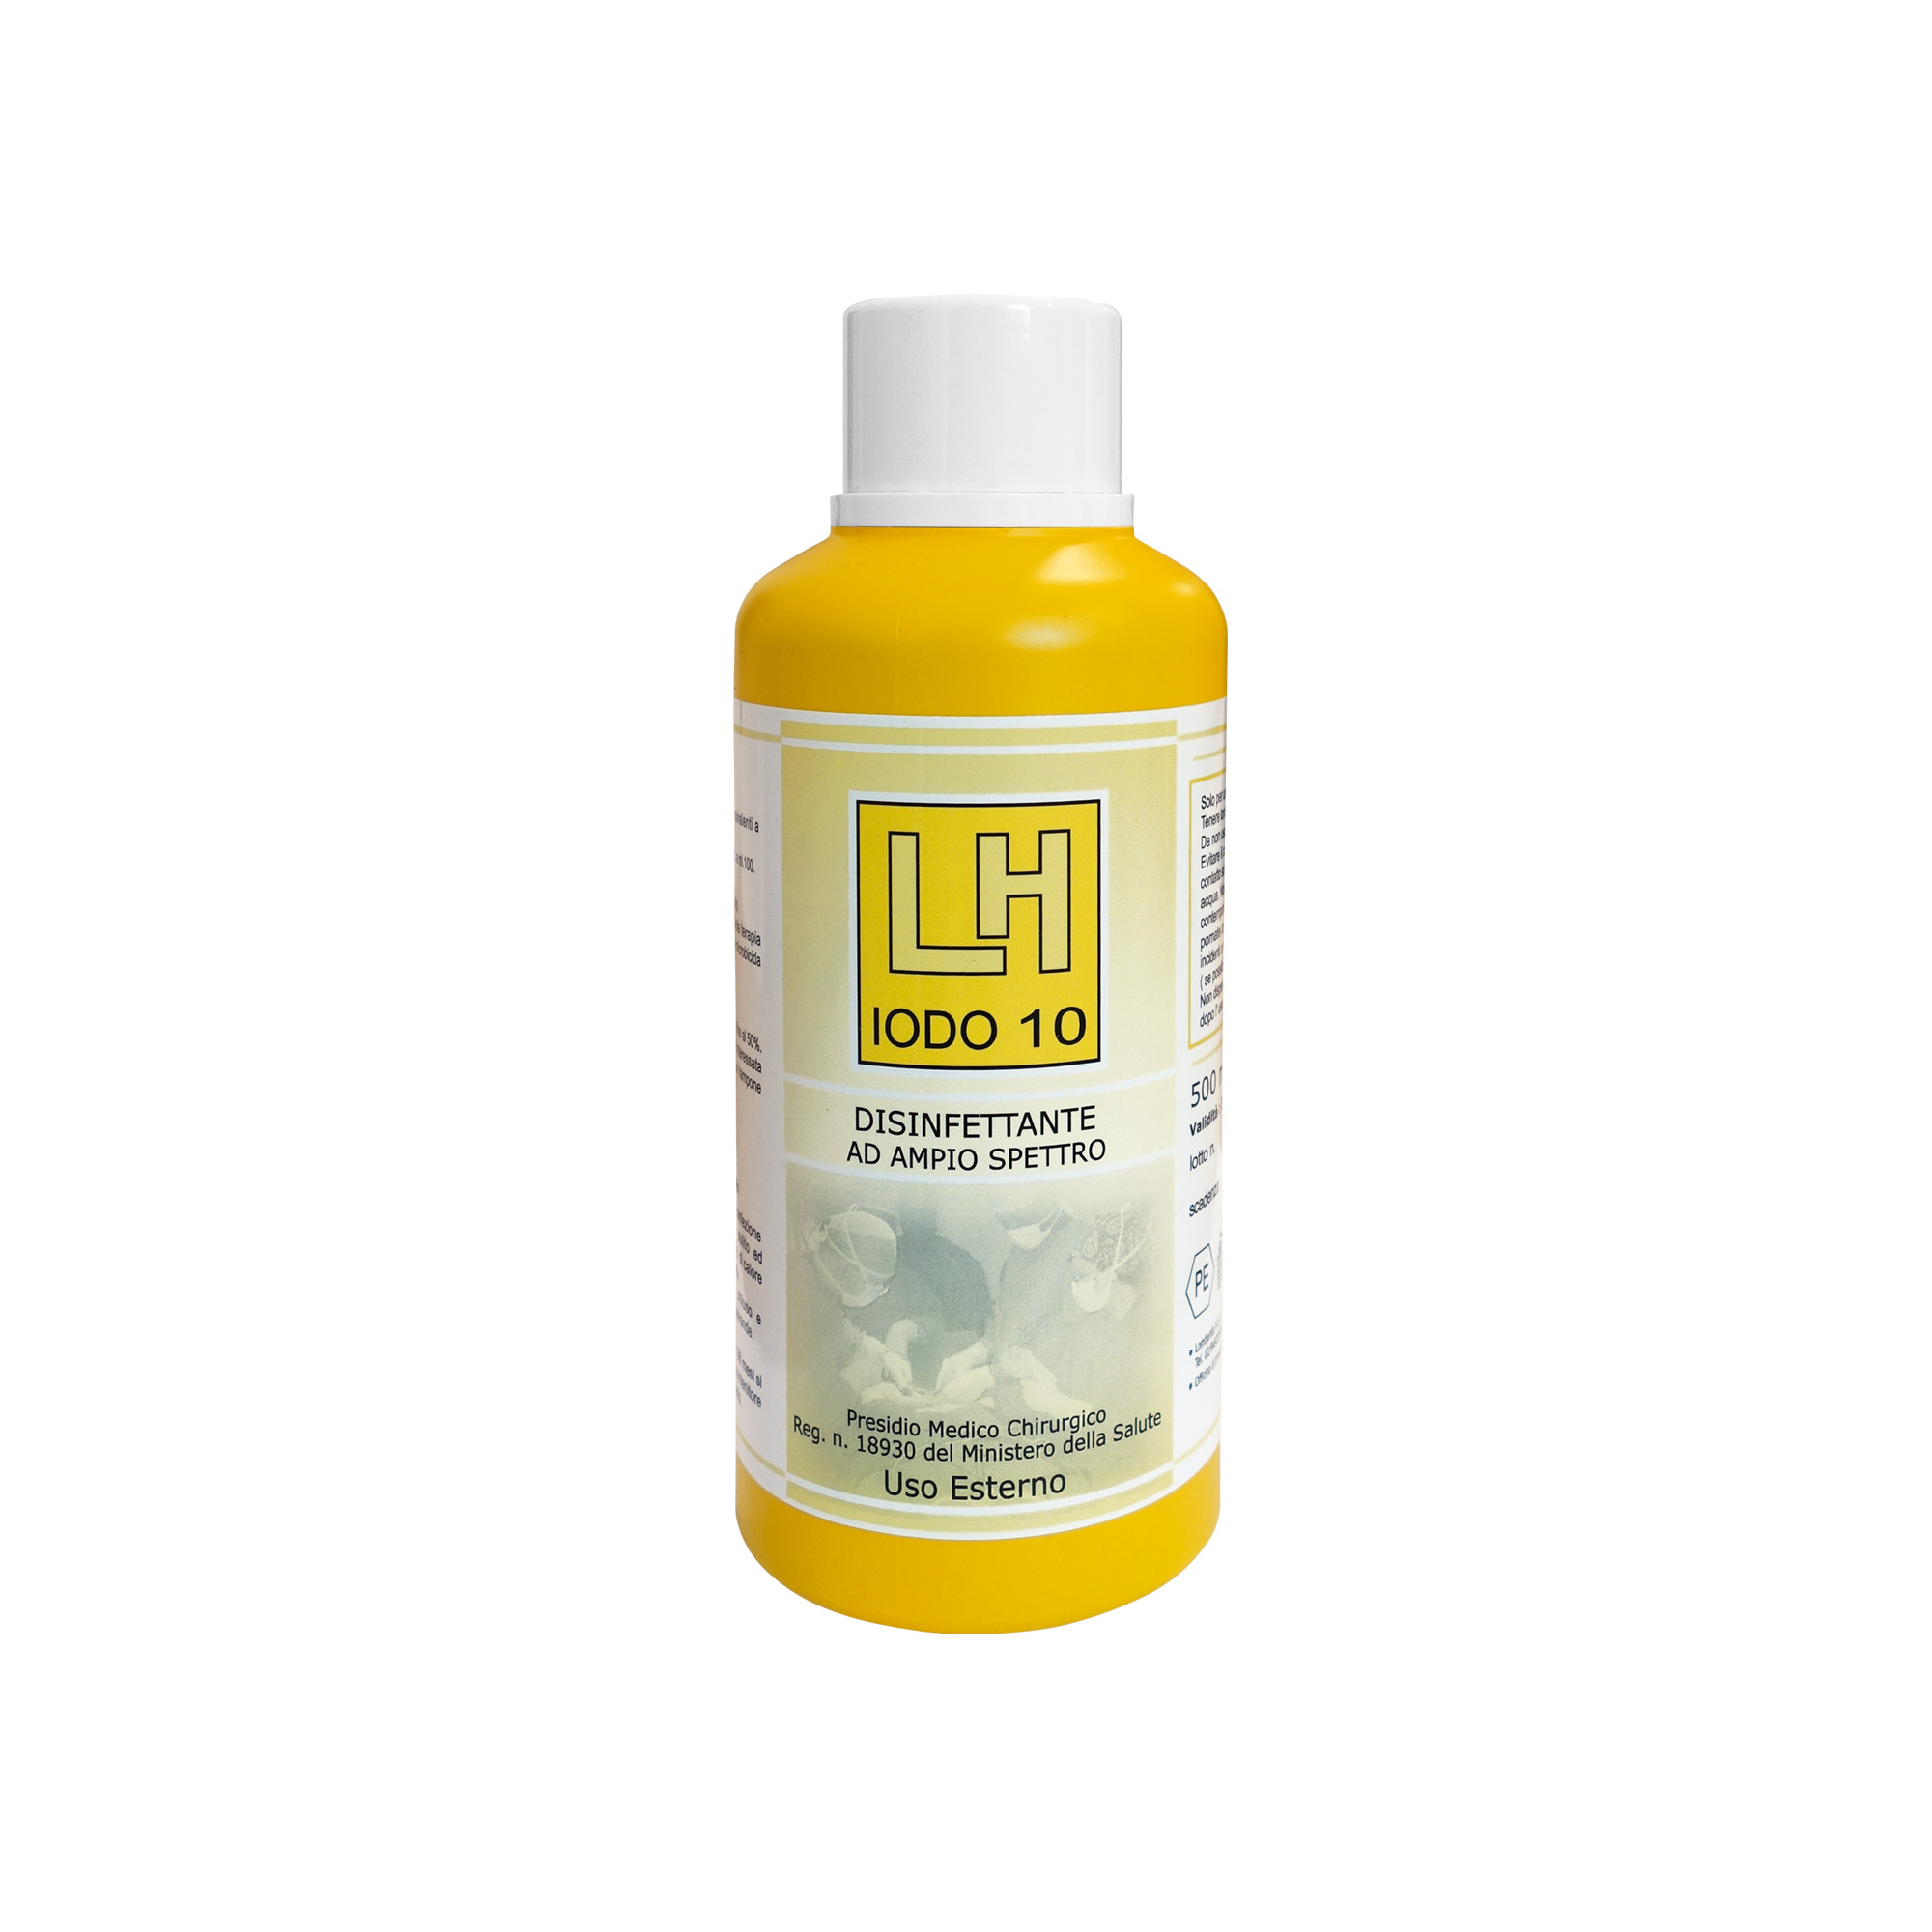 Broad spectrum skin disinfectant LH Iodo 10 Iodopovidone 1000 ml